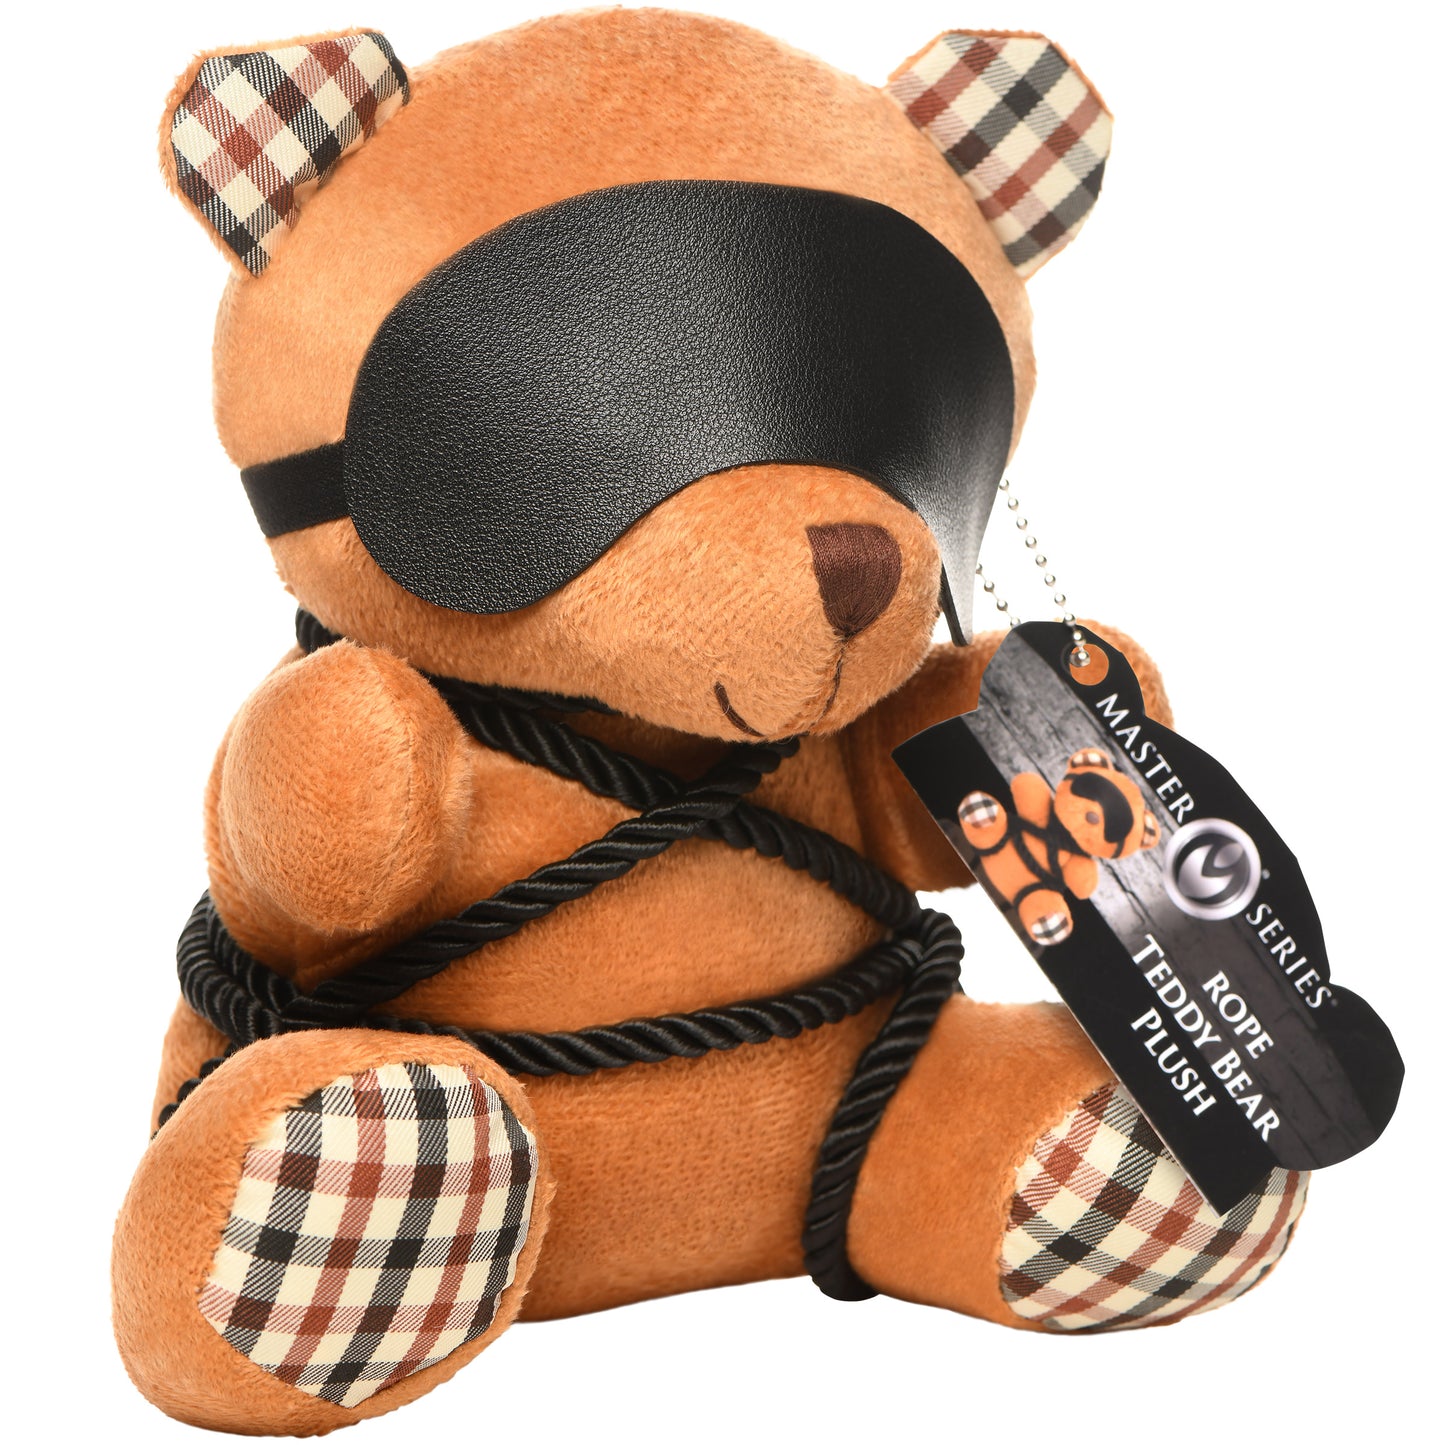 Rope Bondage Teddy Bear